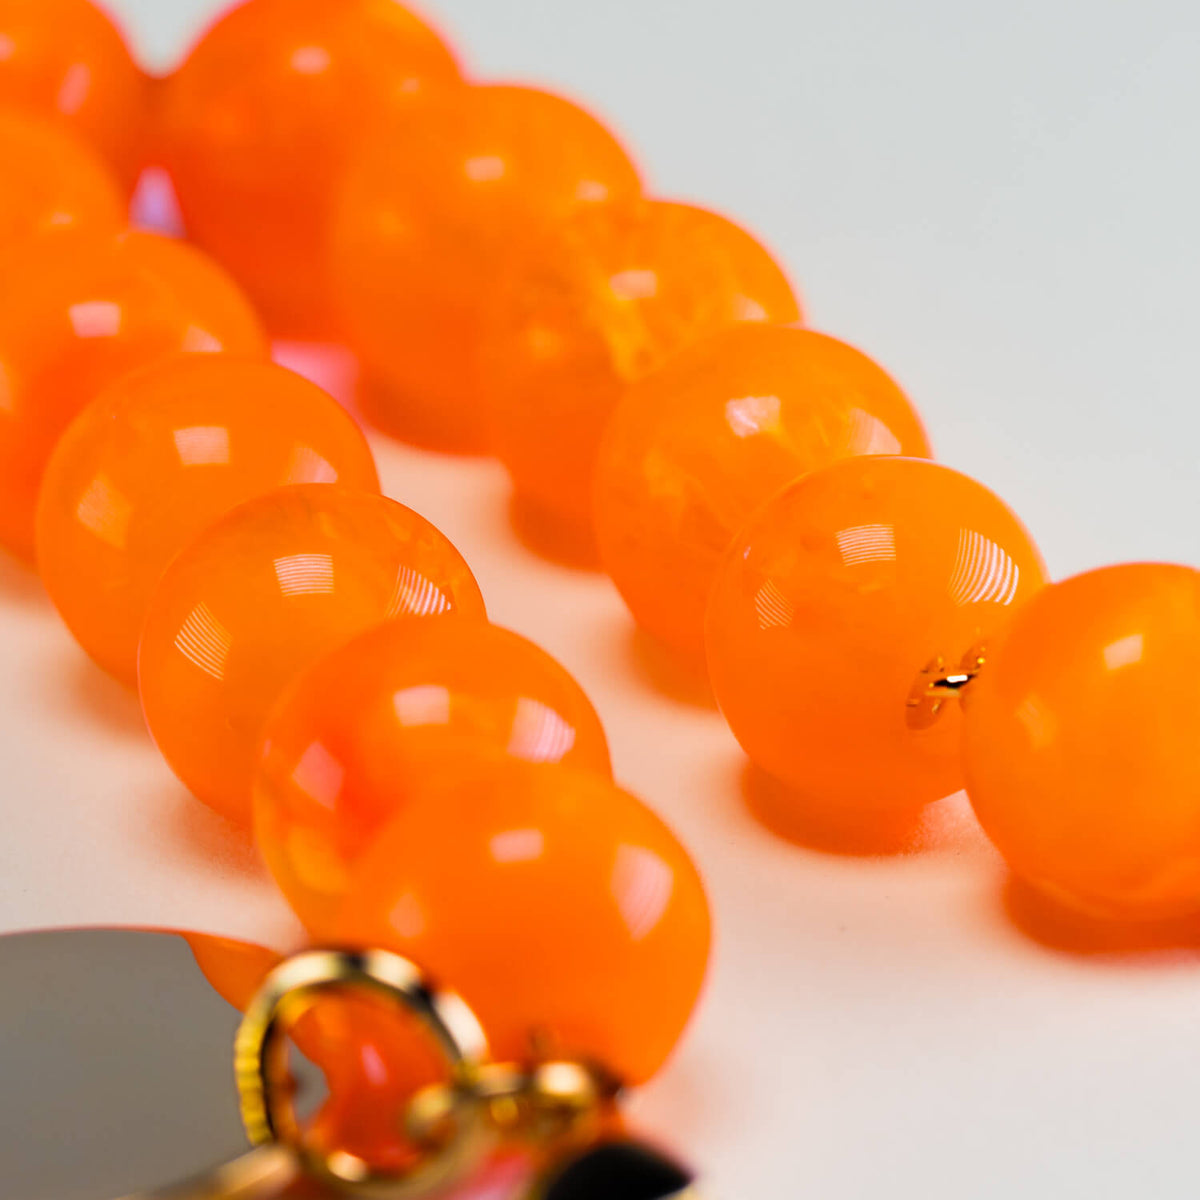 Mini Beads Bracelet Neon Orange Marble